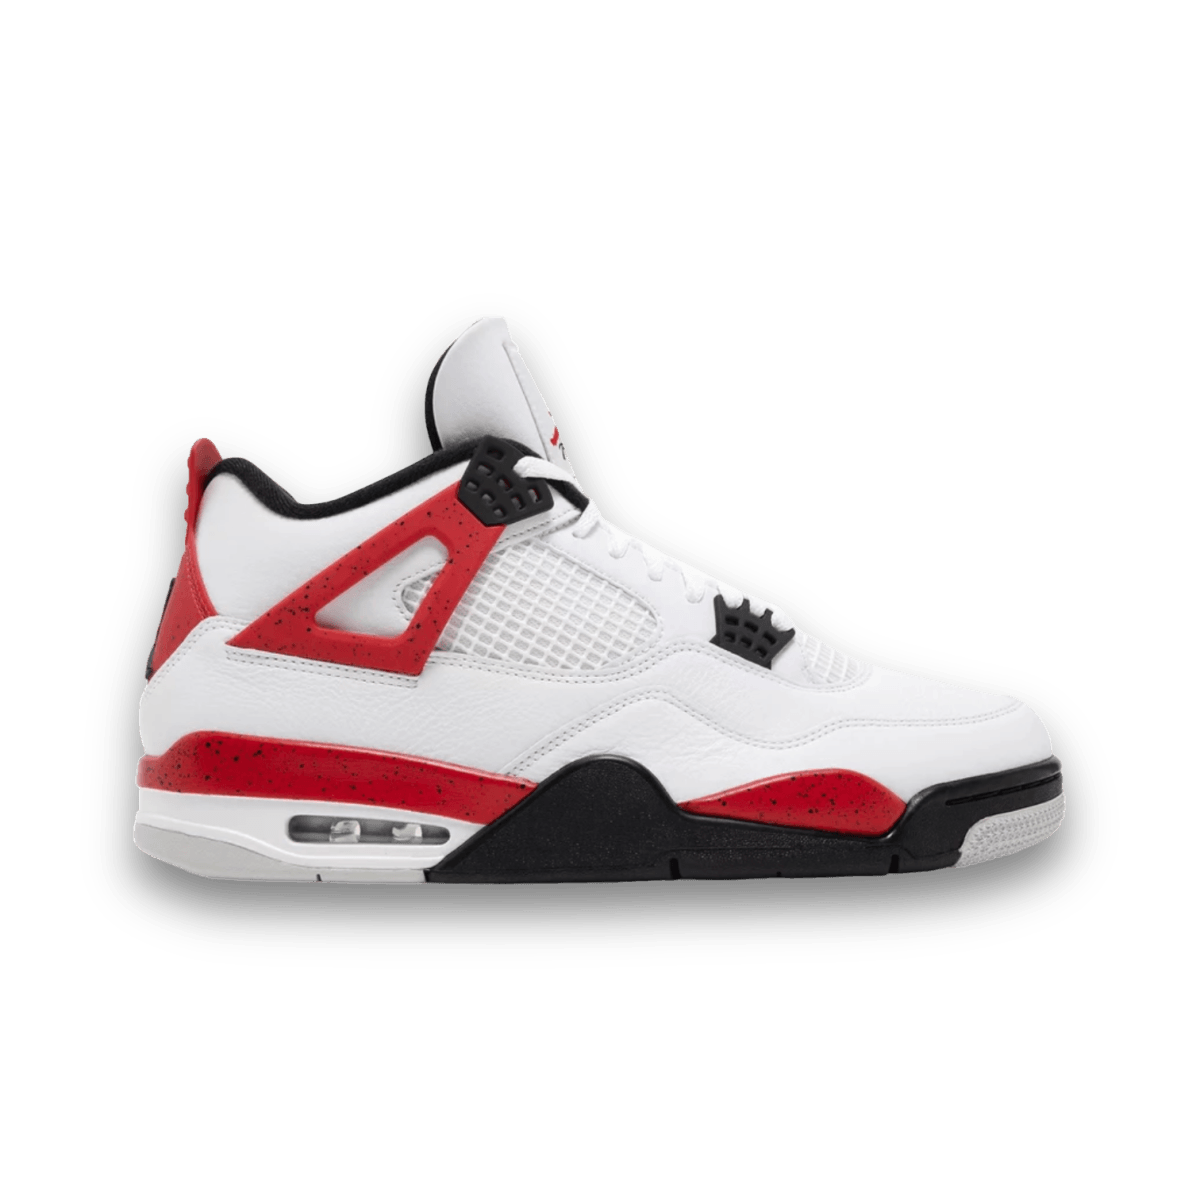 Air Jordan 4 Retro 'Red Cement' - Mid Sneaker - Jawns on Fire Sneakers & Streetwear